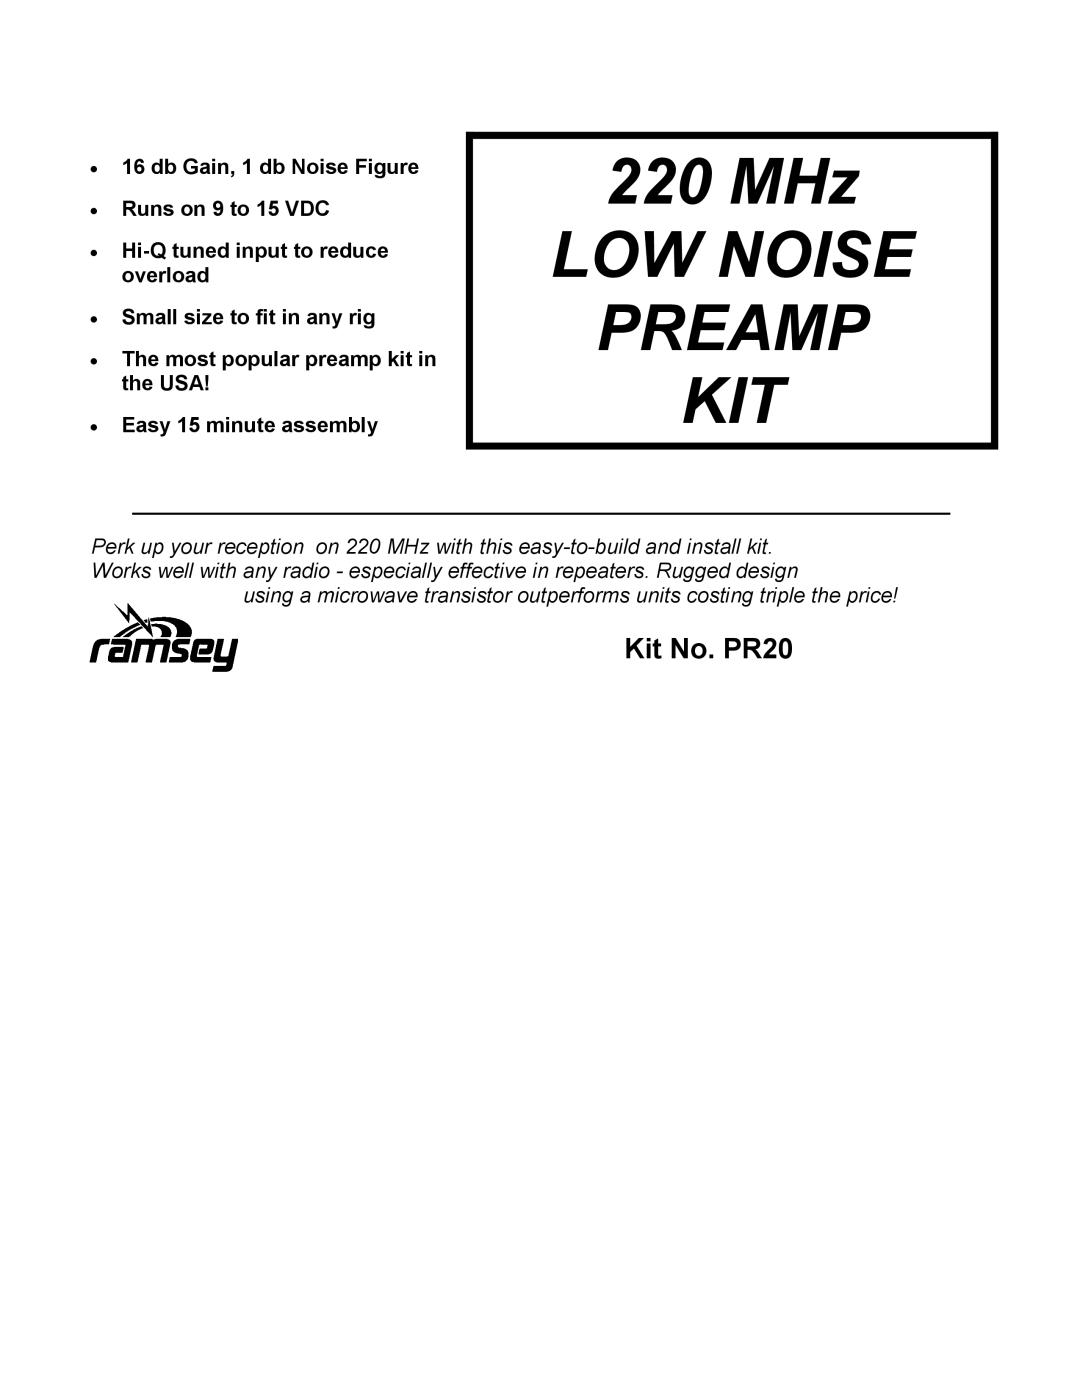 Ramsey Electronics manual Kit No. PR20, 220MHz LOW NOISE PREAMP KIT, db Gain, 1 db Noise Figure, Runs on 9 to 15 VDC 